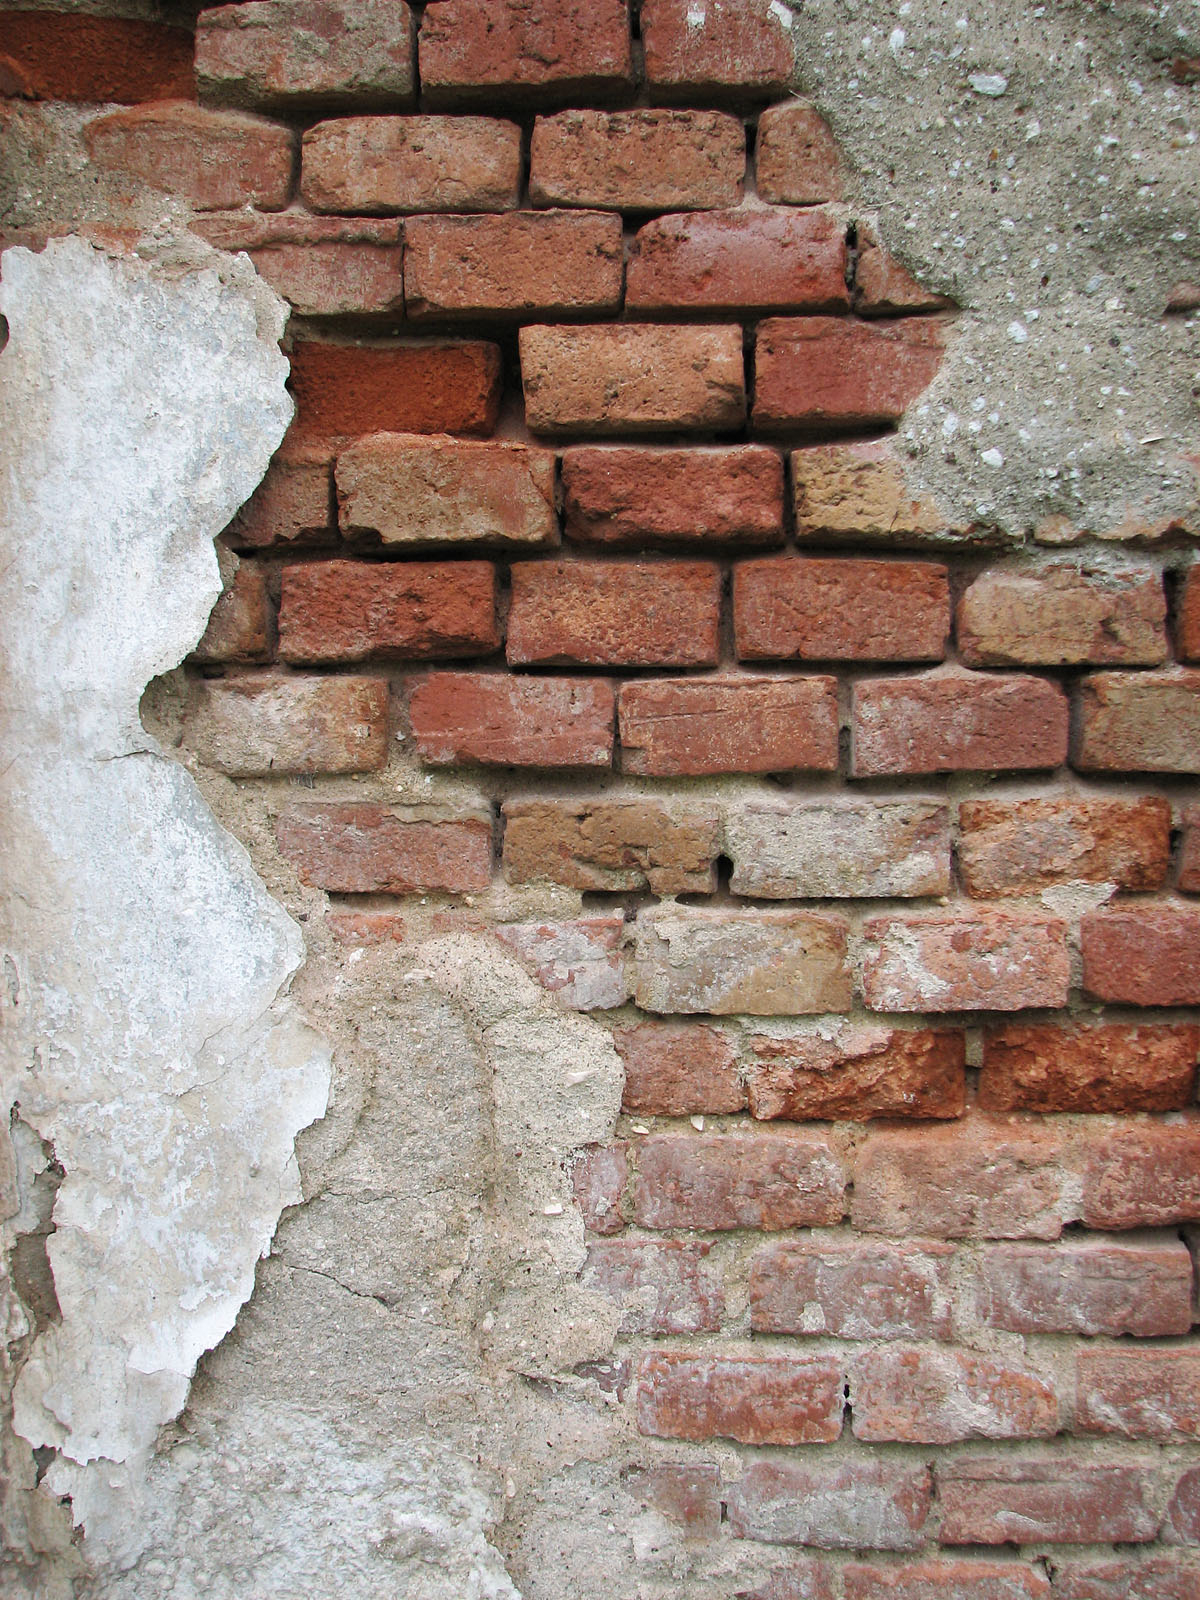 Bricks by Mish-A-Man